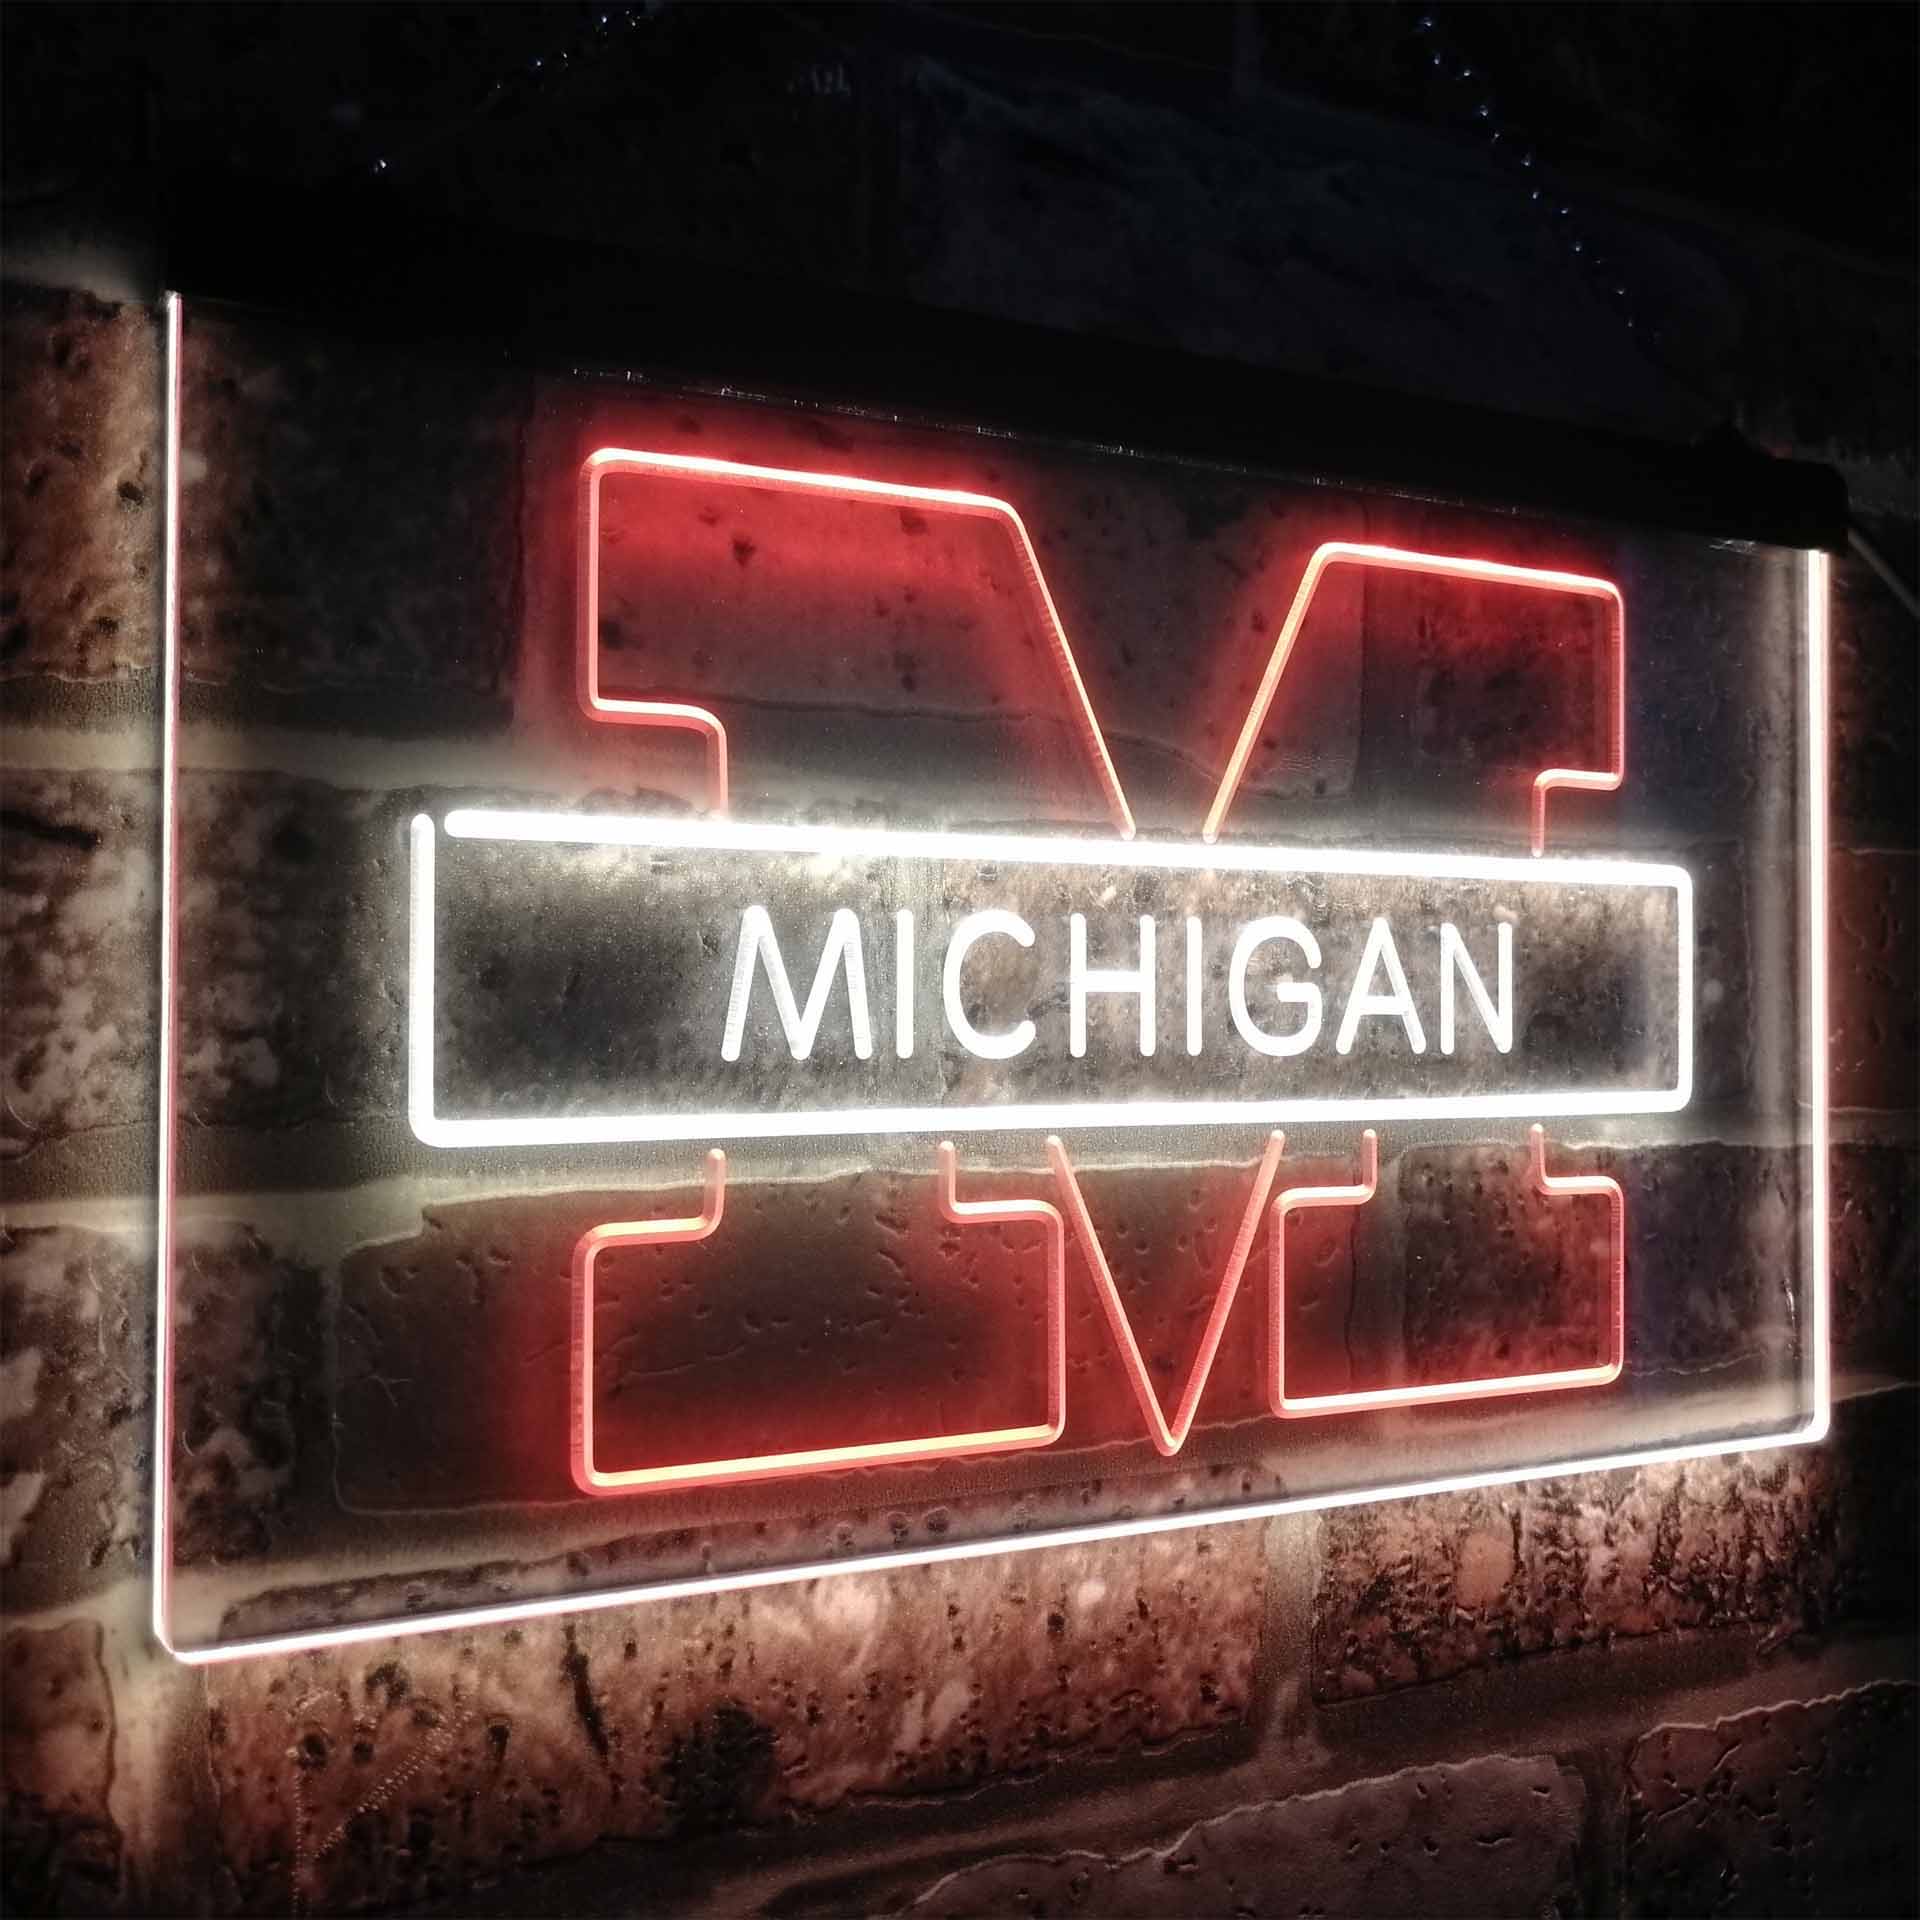 Michigan Sport Team Basketball Neon LED Sign